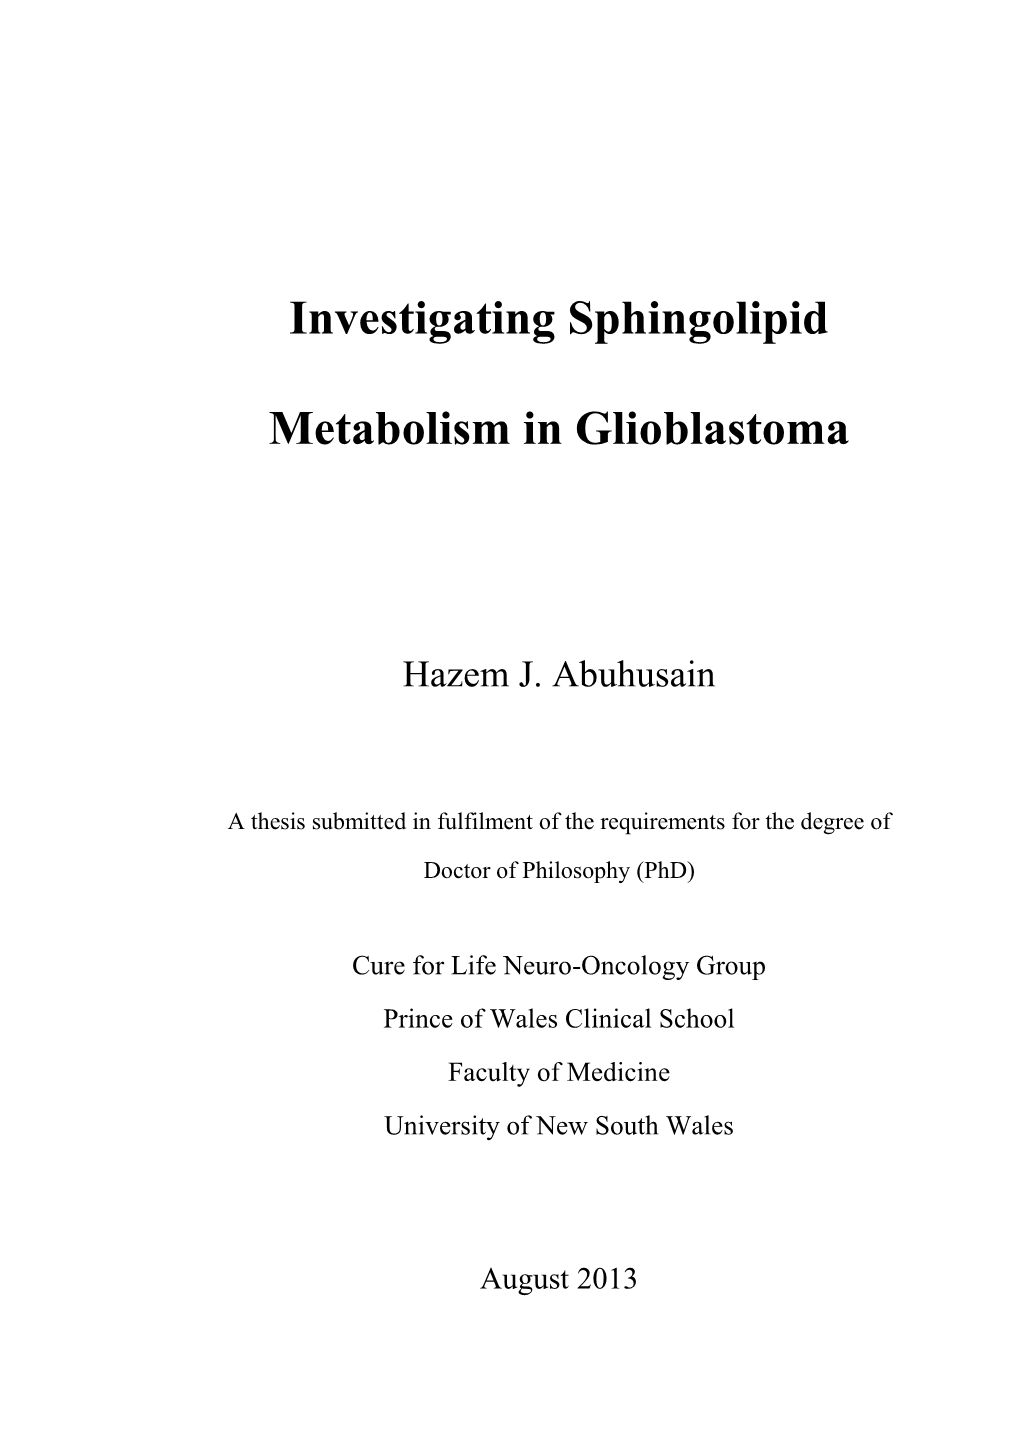 Investigating Sphingolipid Metabolism in Glioblastoma